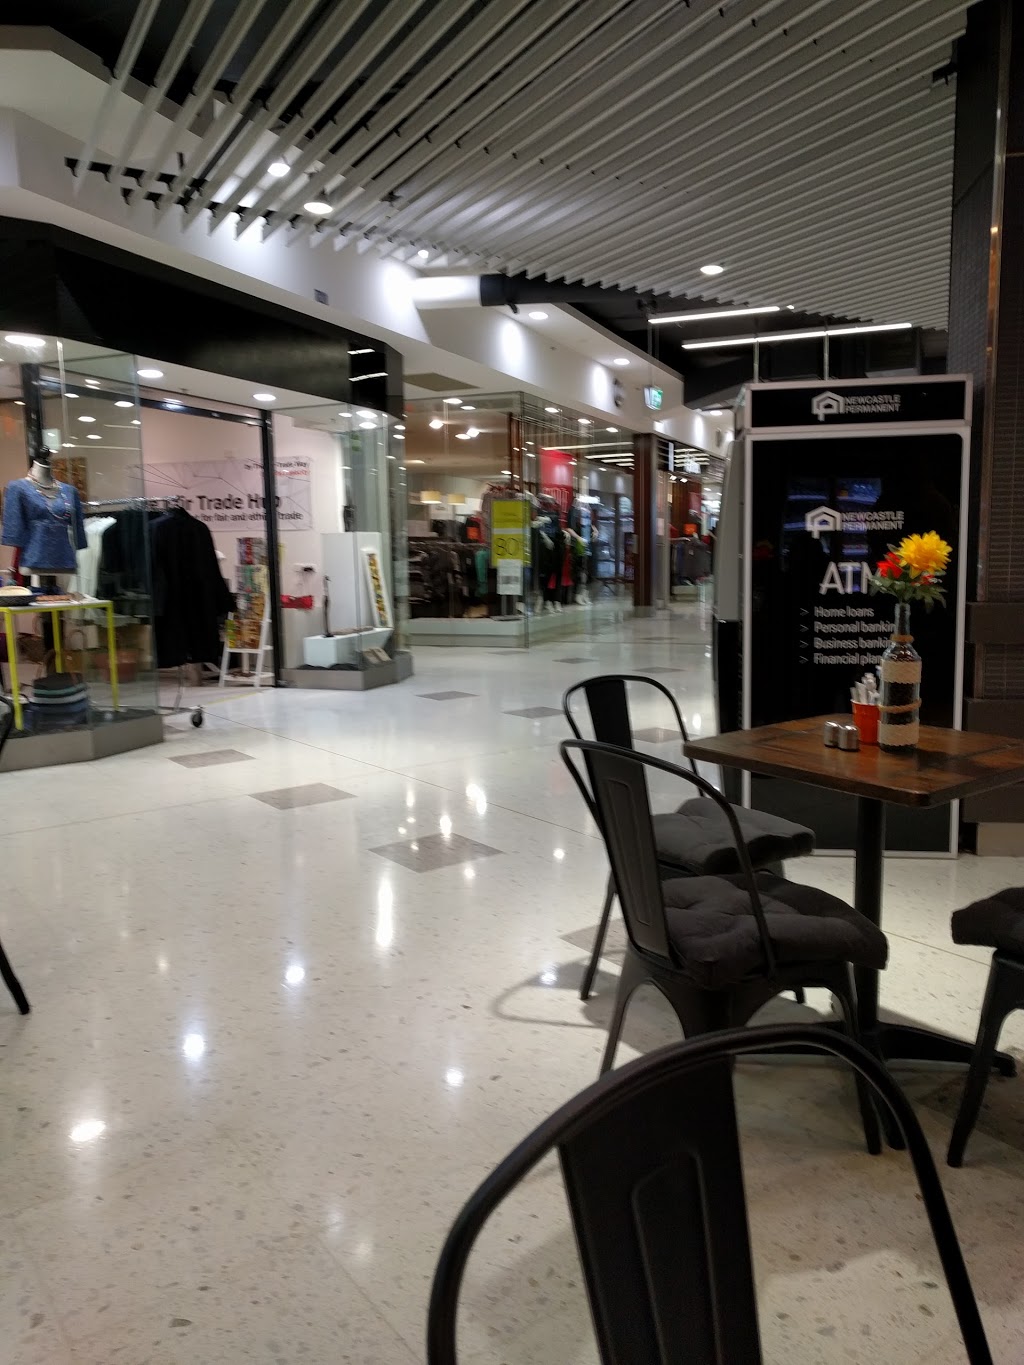 Belmont Central Shopping Centre | 1 Singleton St, Belmont NSW 2280, Australia | Phone: (02) 4040 9090